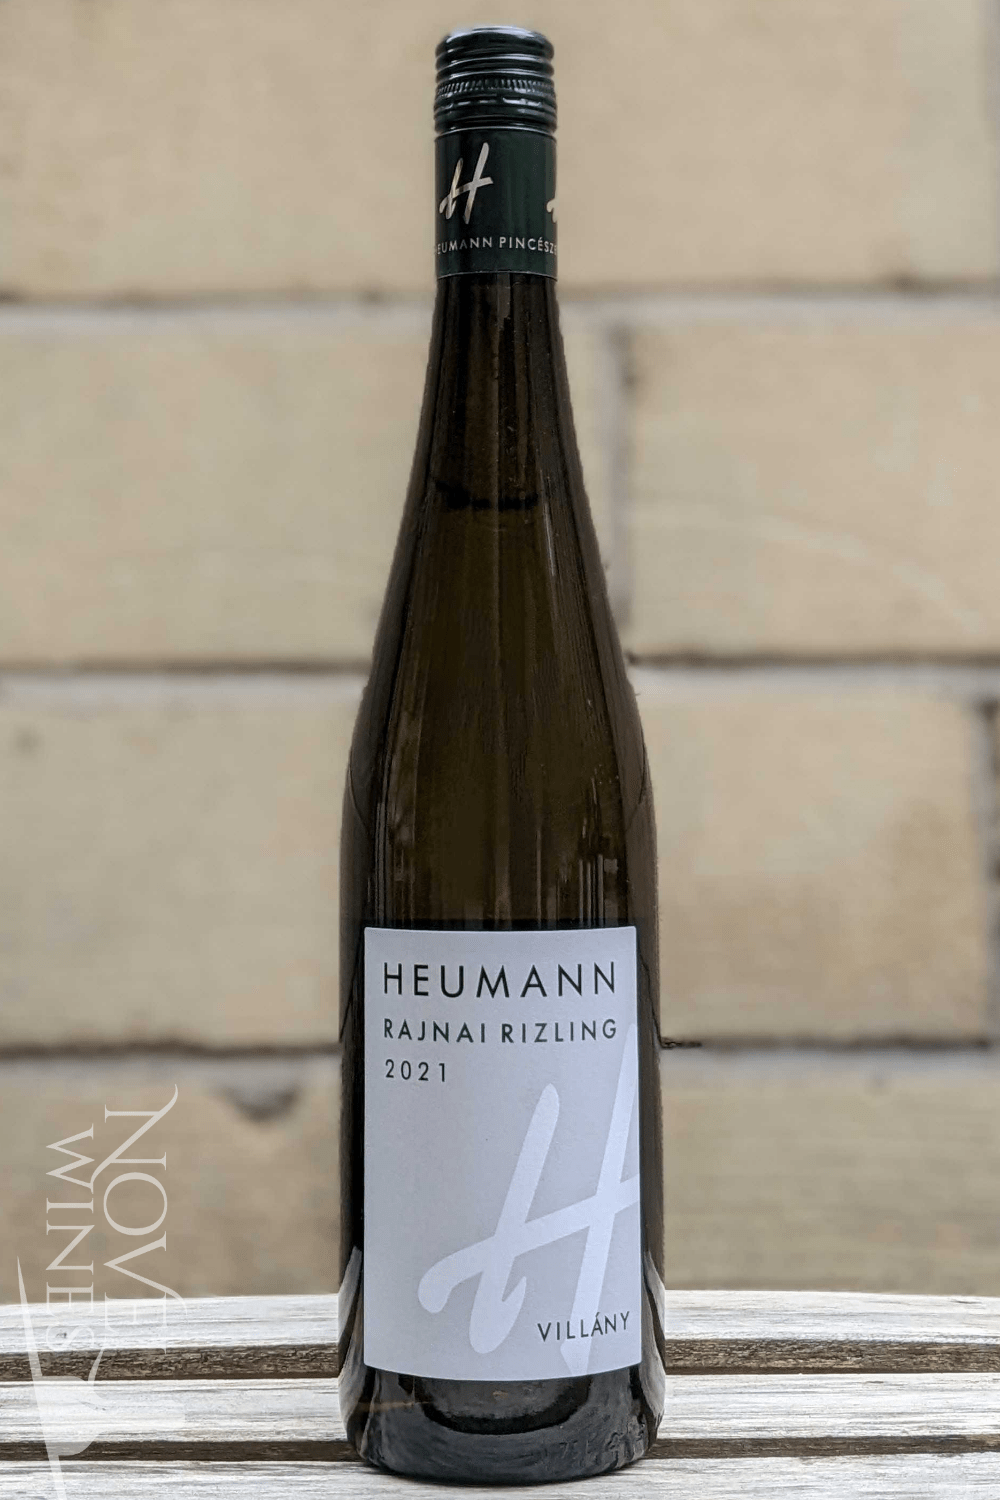 Heumann White Wine Heumann Riesling (Rajnai Rizling) 2021, Hungary